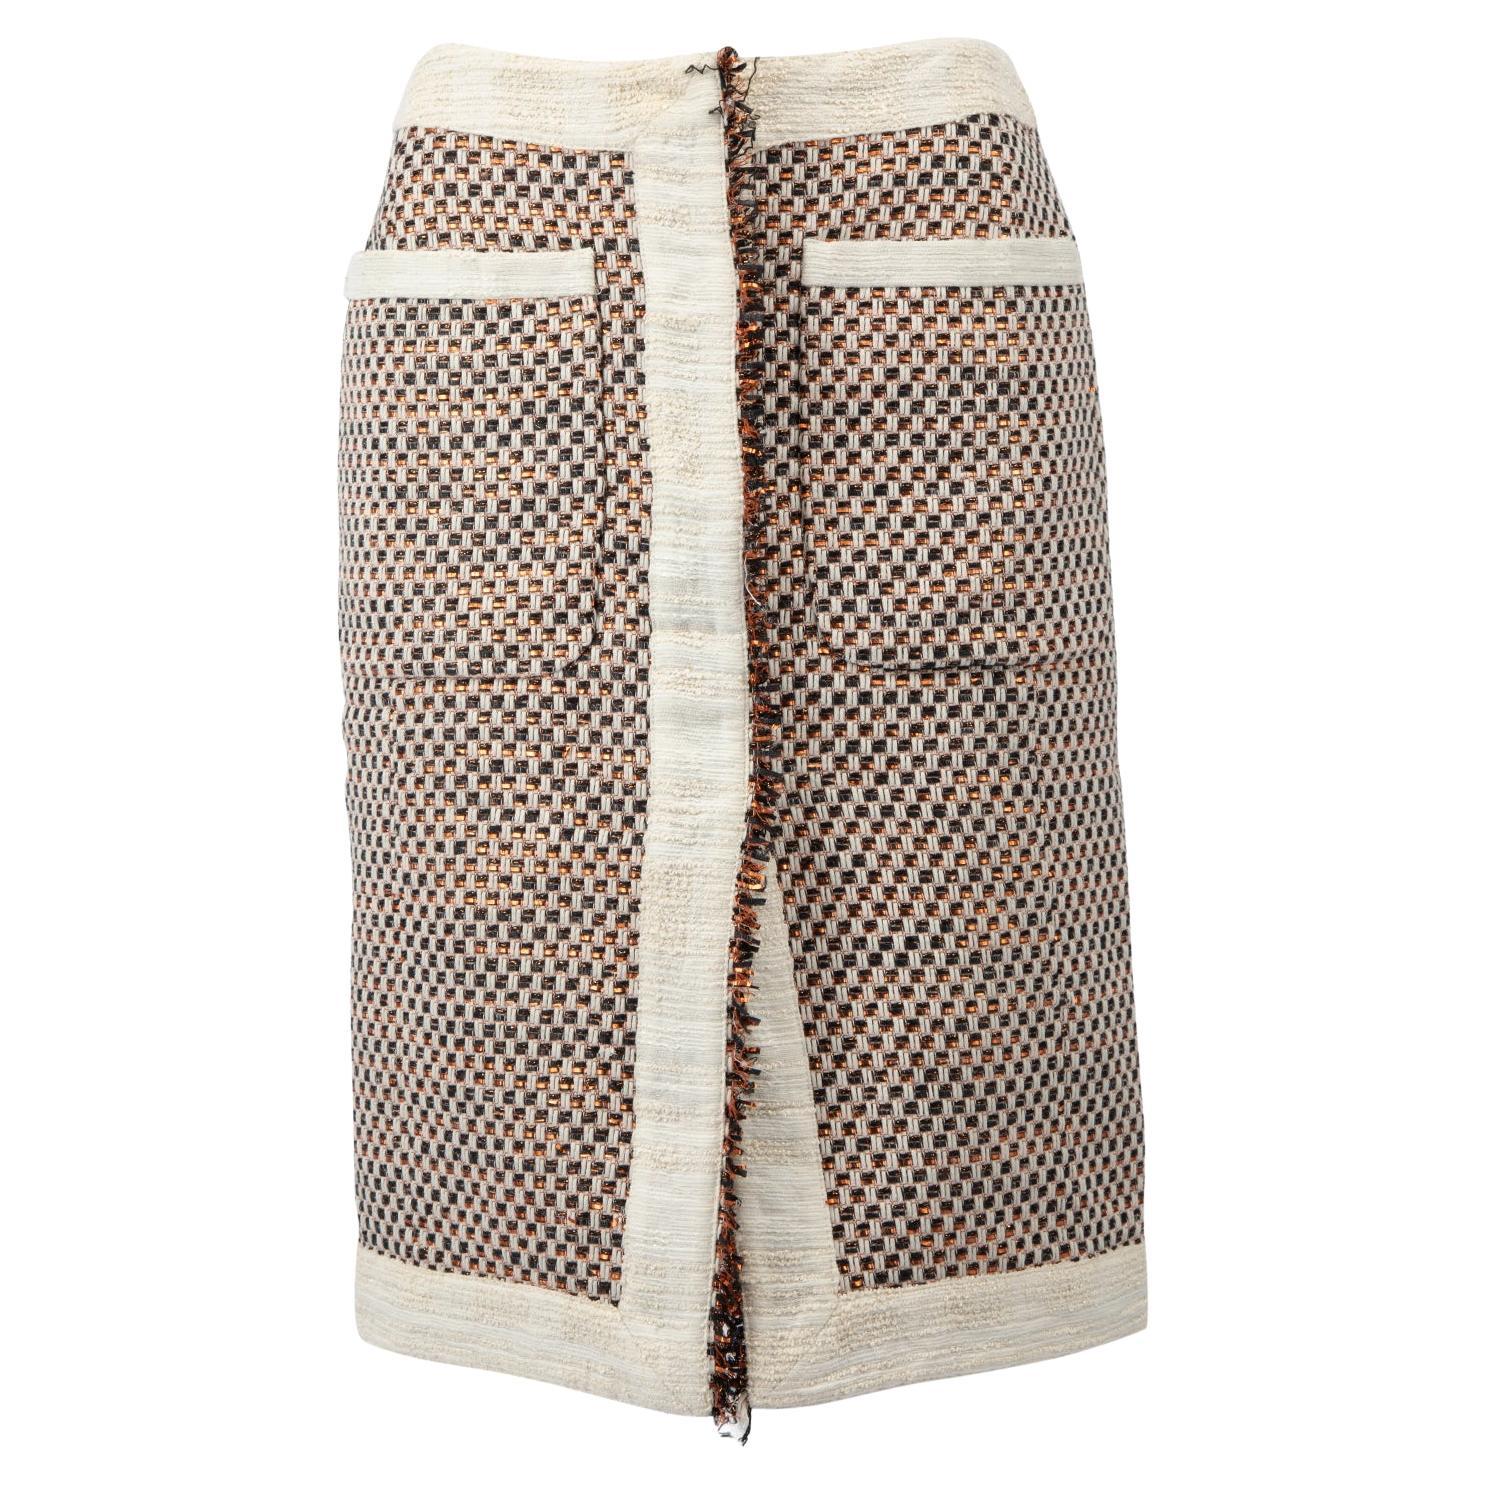 Pre-Loved Altuzarra Women's Tweed Cotton Pencil Skirt with Front Pockets